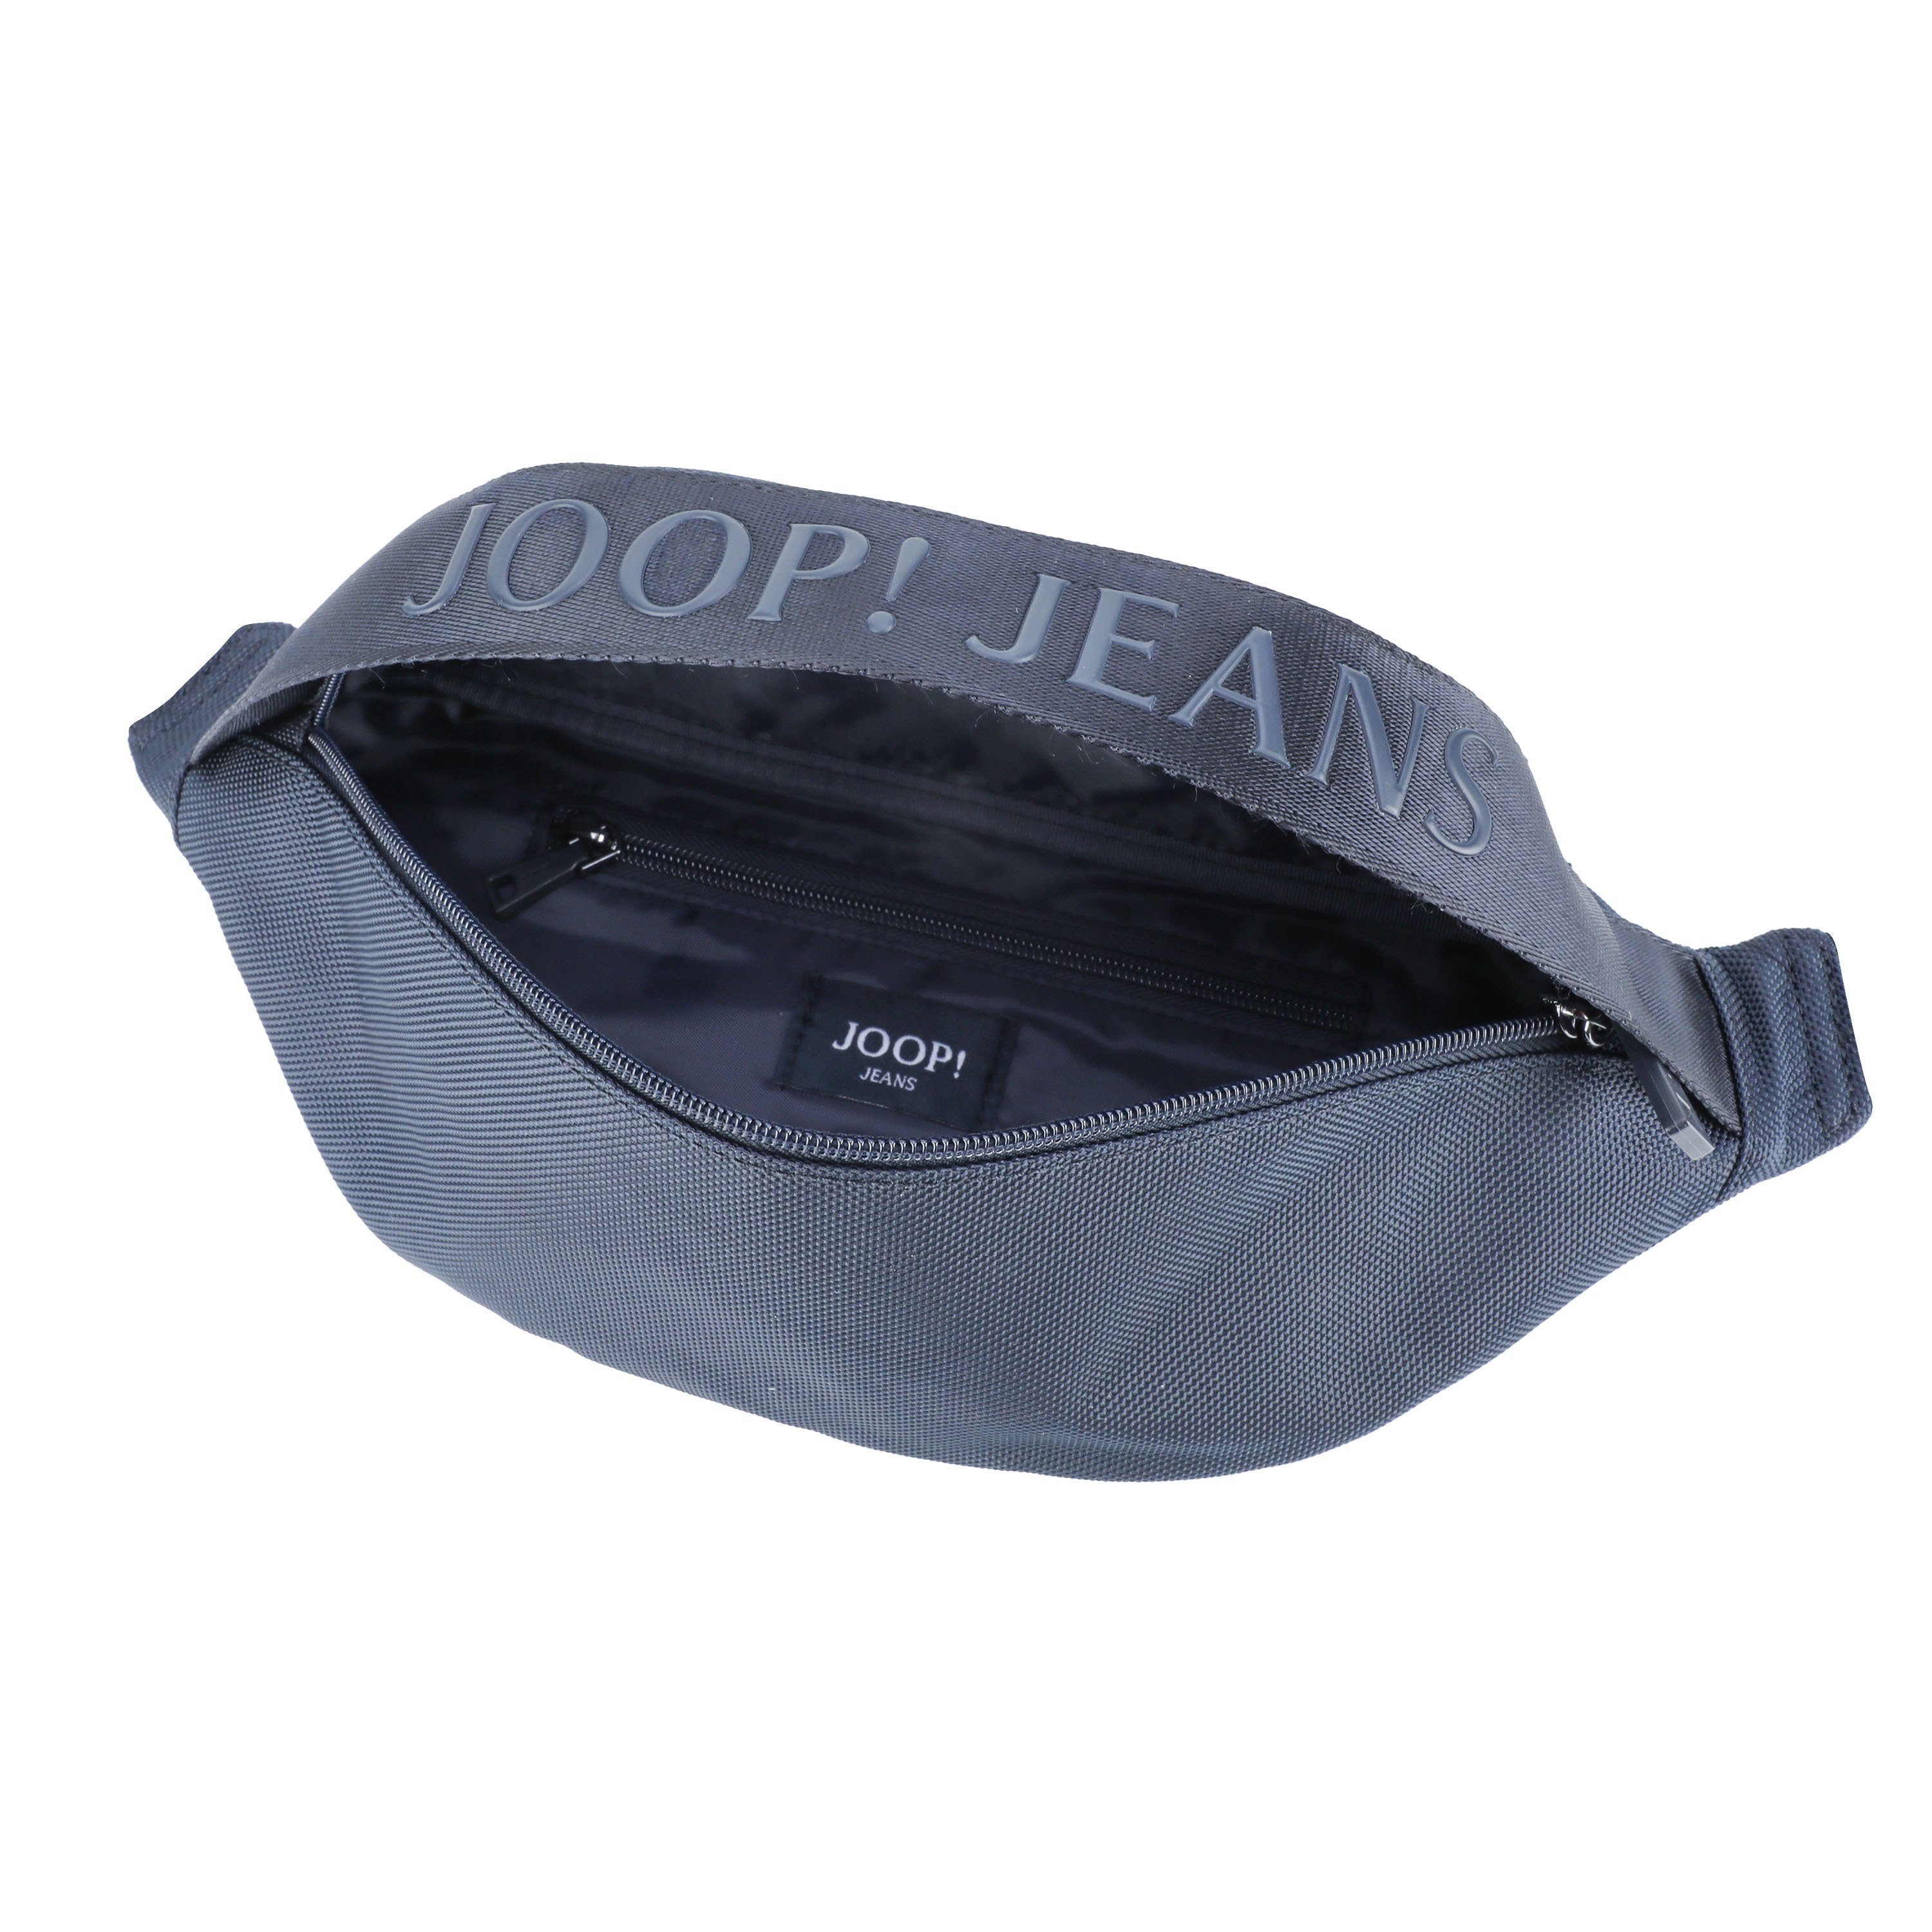 Joop Jeans Gürteltasche, dunkelblau mit zipper